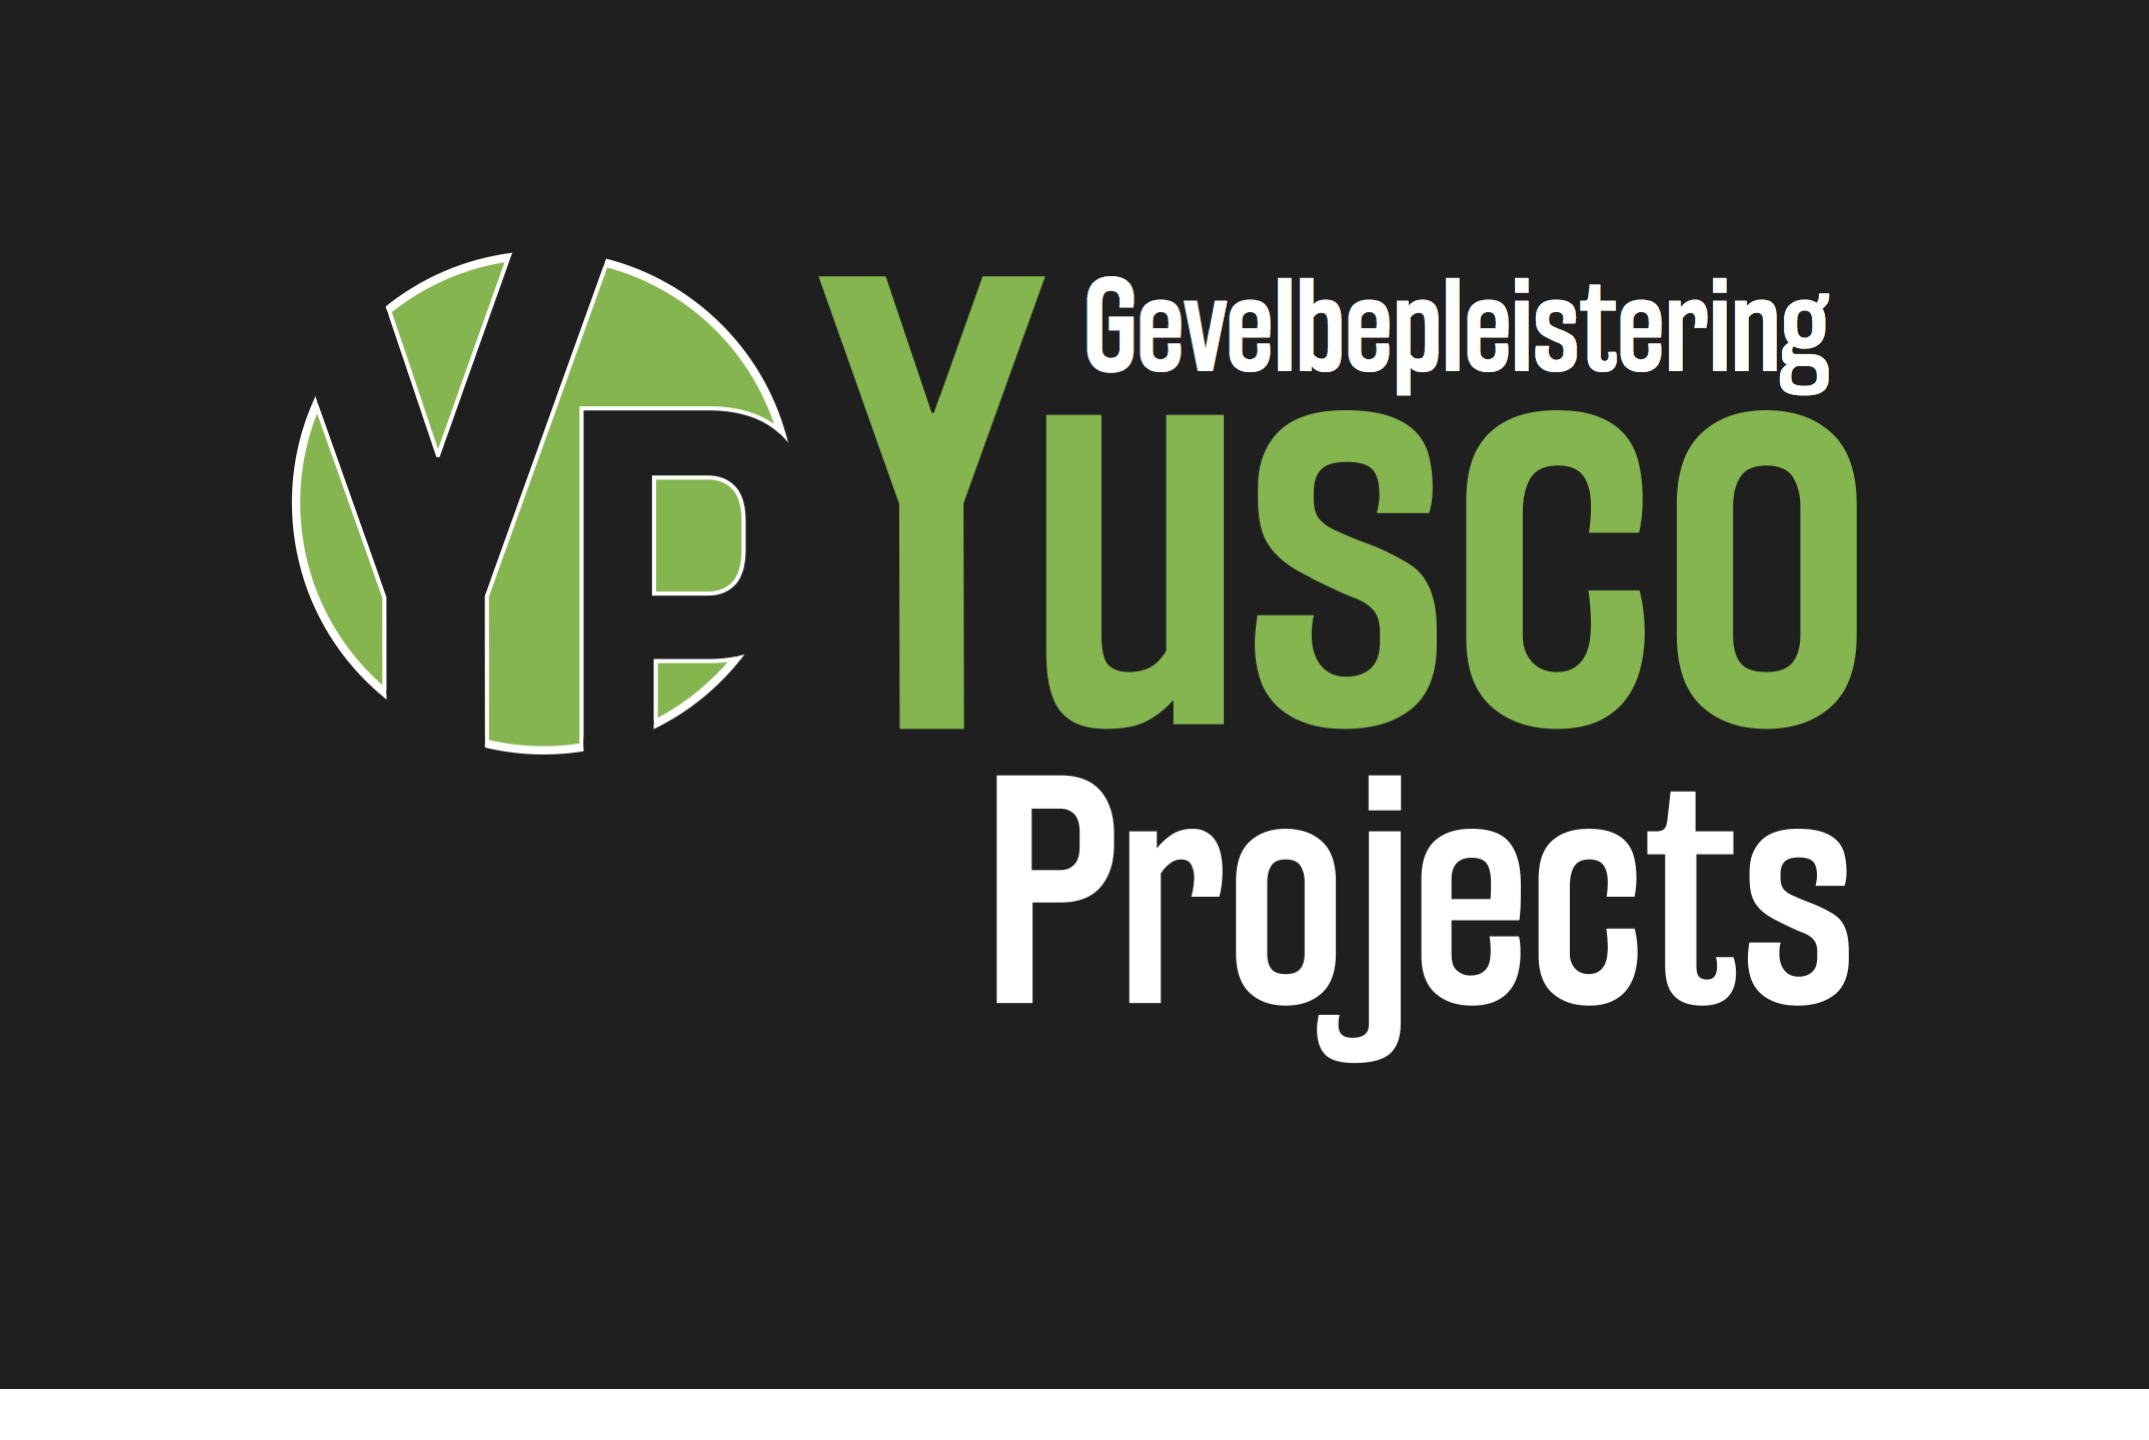 gevelrenovateurs Gent Yusco Projects Gevelbepleistering